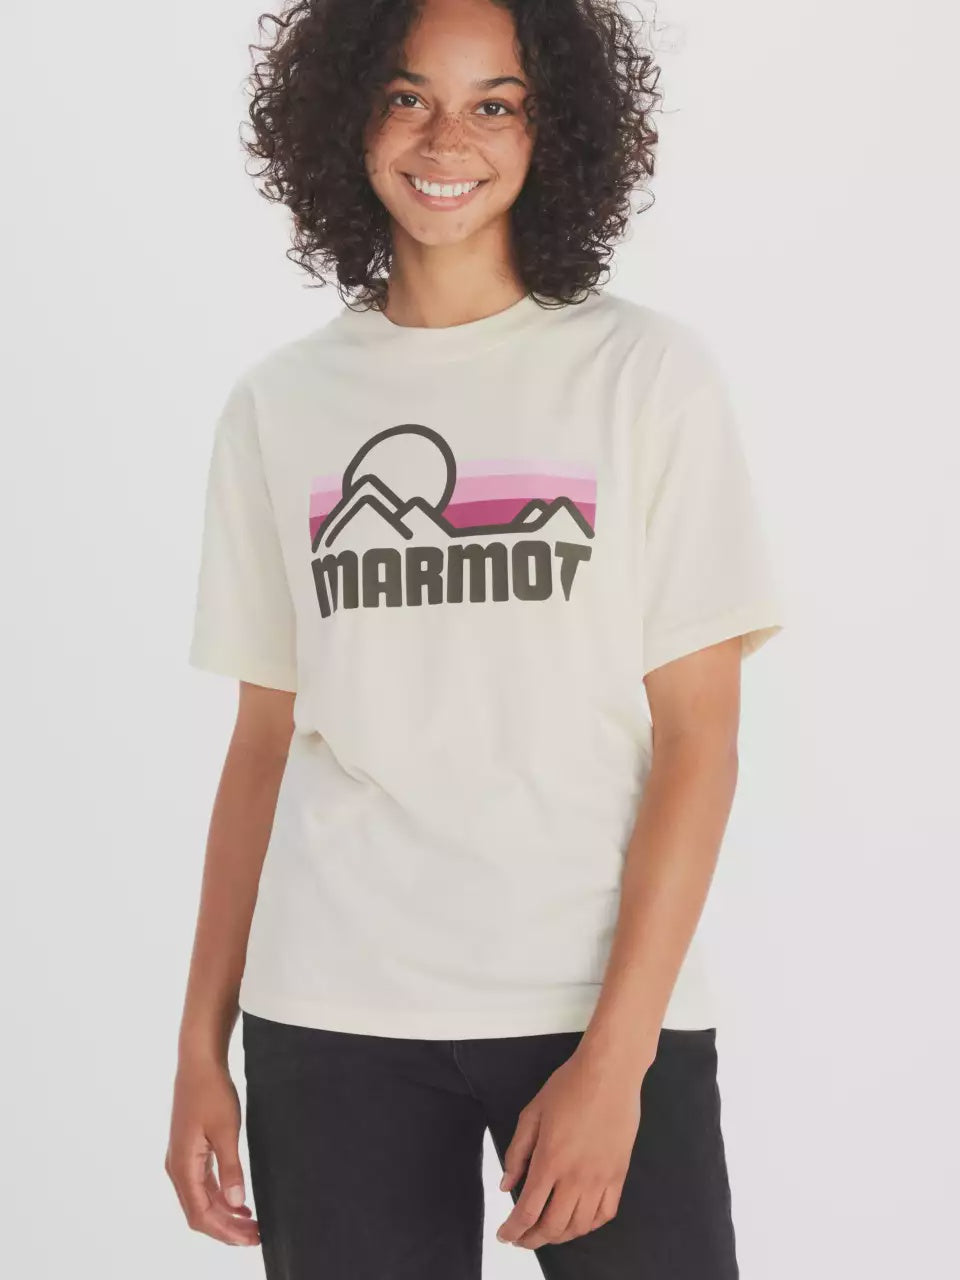 Marmot - Women's Coastal Short-Sleeve T-Shirt